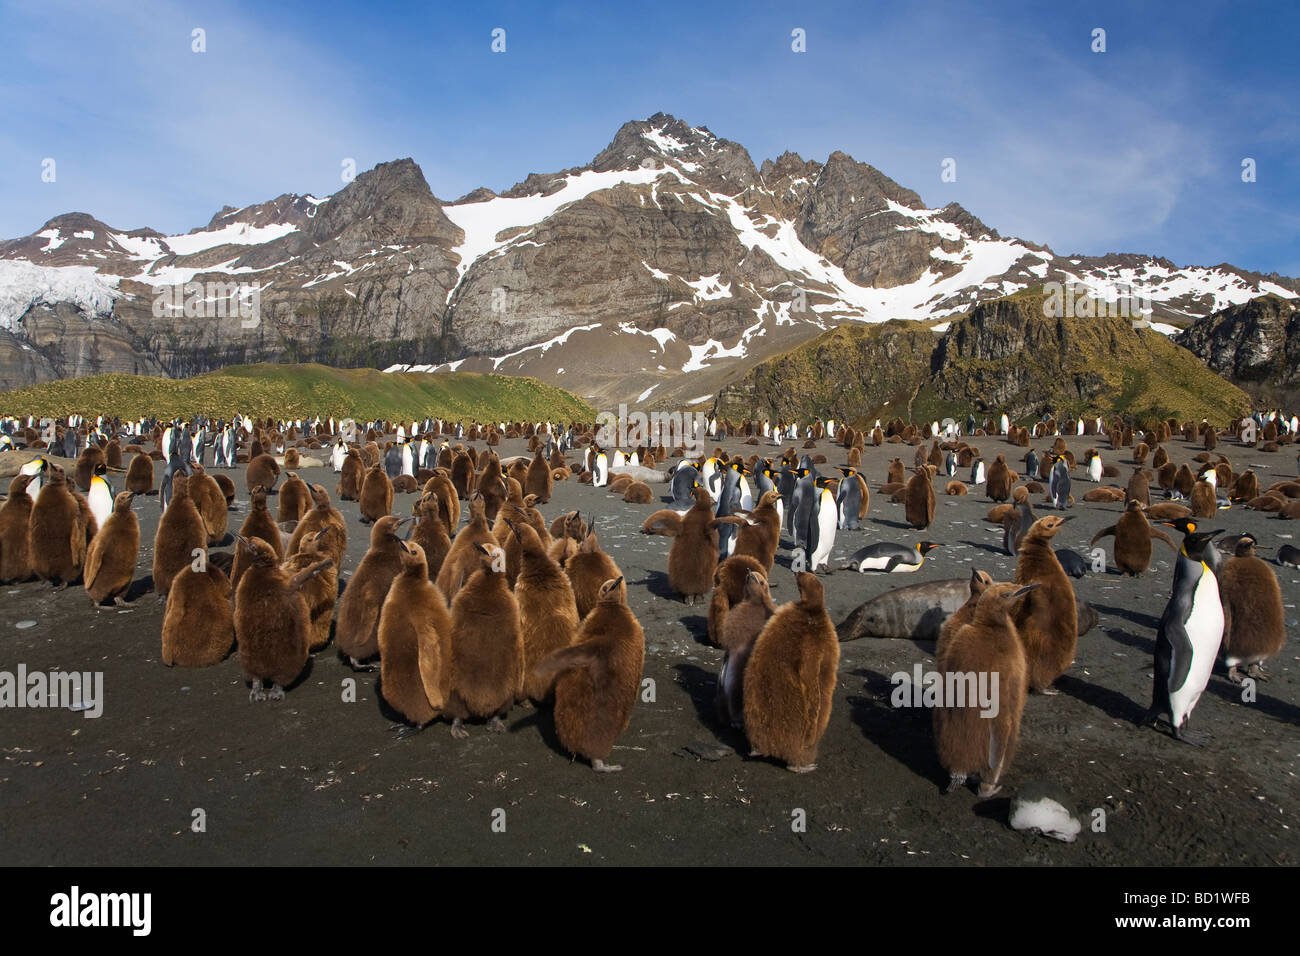 King penguins Aptenodytes patagonicus on the beach at Gold Harbour South Georgia Antarctica Stock Photo